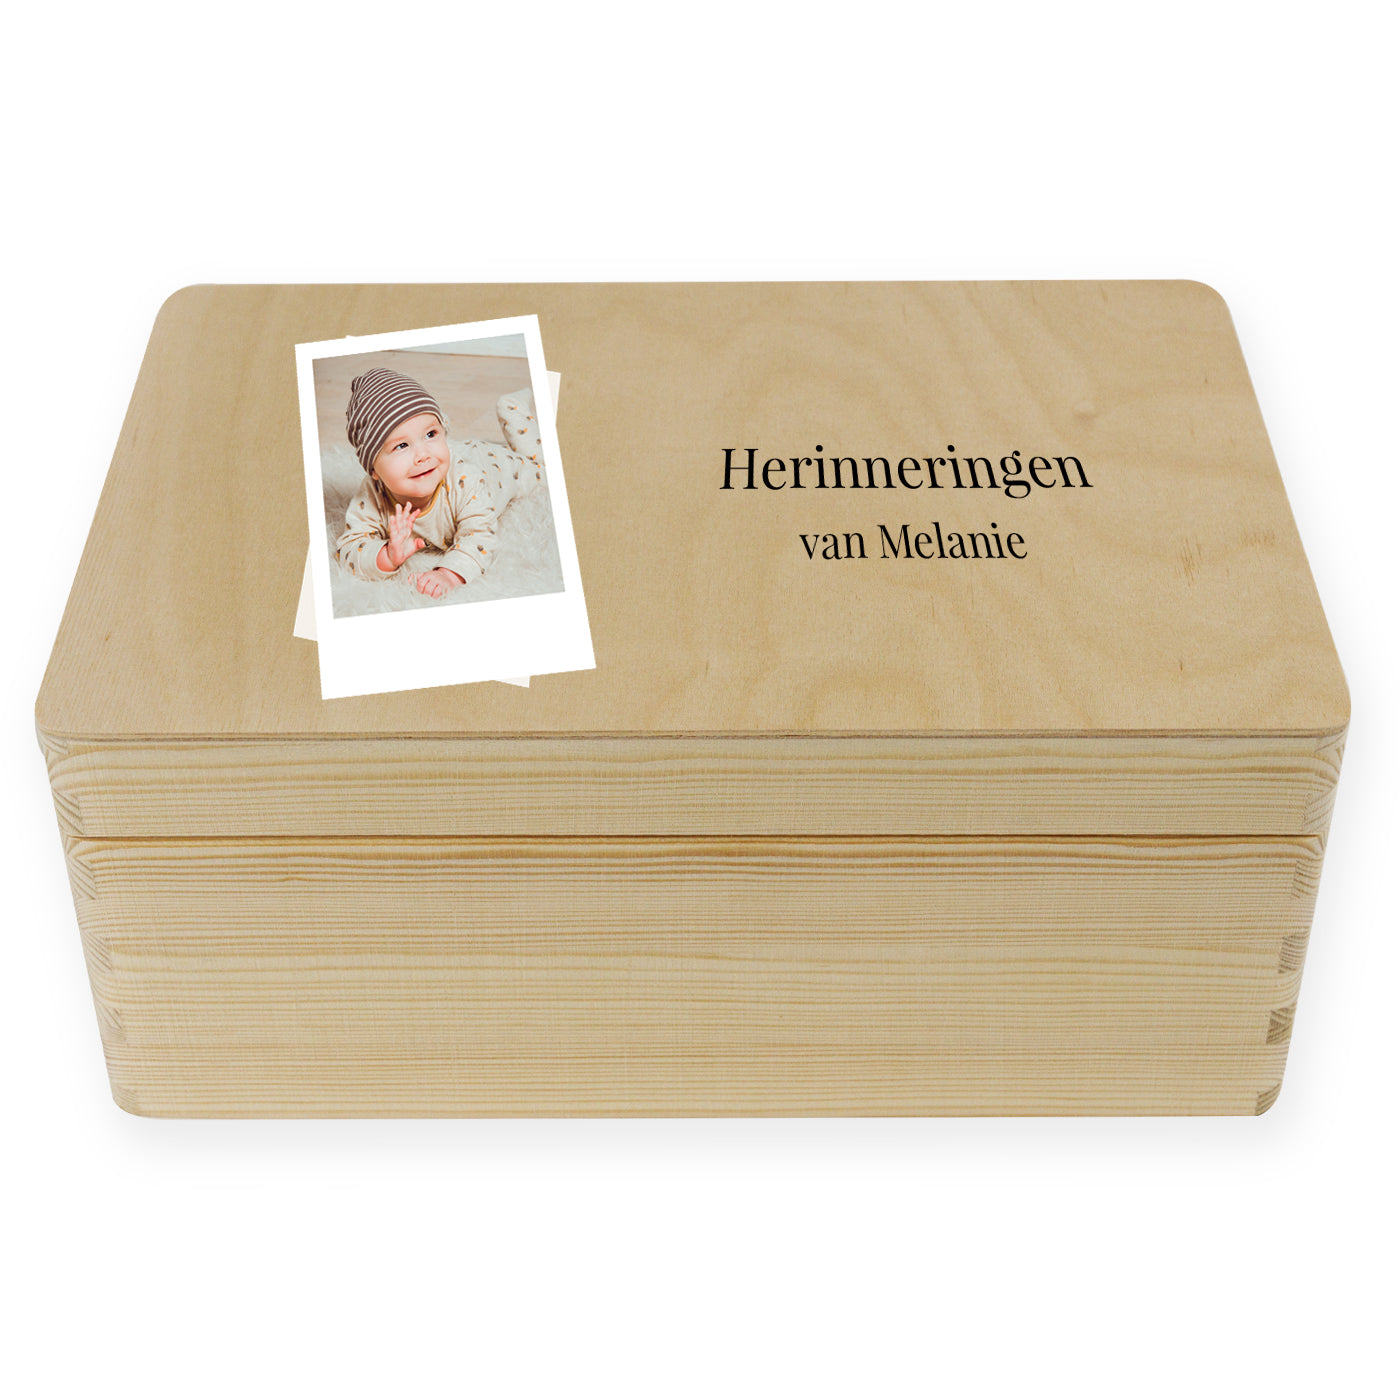 Memory box with name